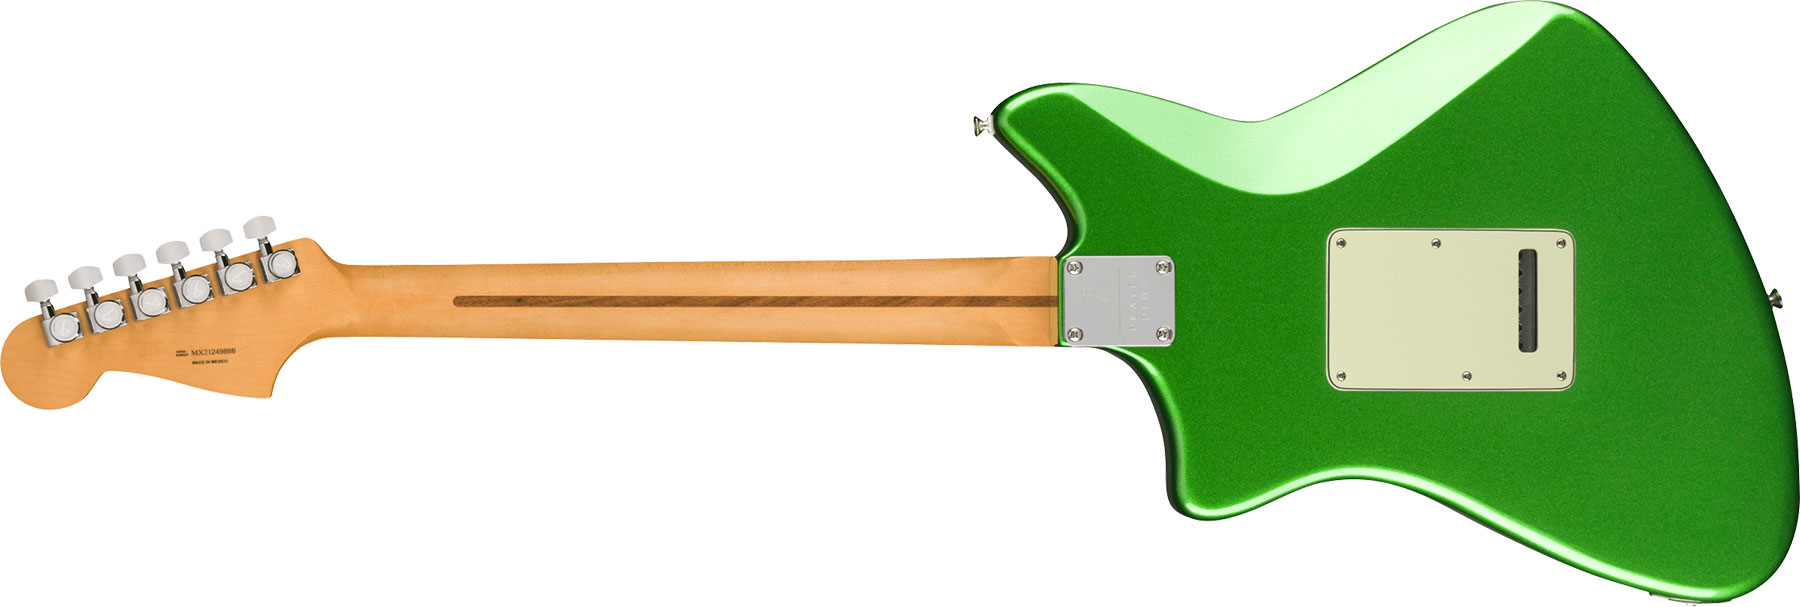 Fender Meteora Player Plus Hh Mex 2h Ht Pf - Cosmic Jade - Retro rock electric guitar - Variation 1